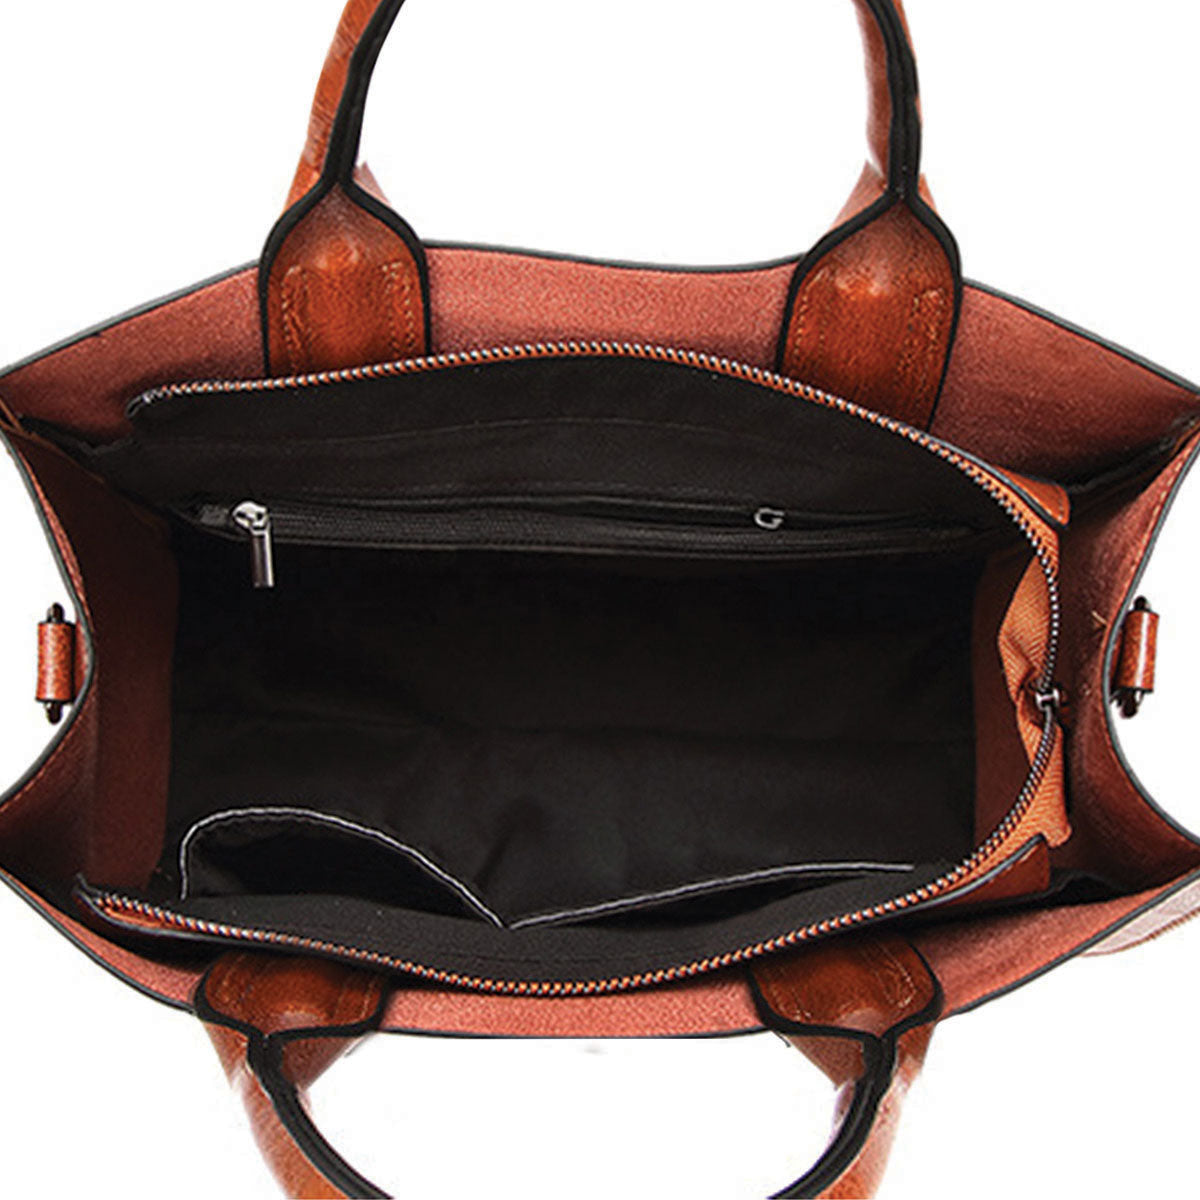 Your Best Companion - Borzoi Luxury Handbag V1